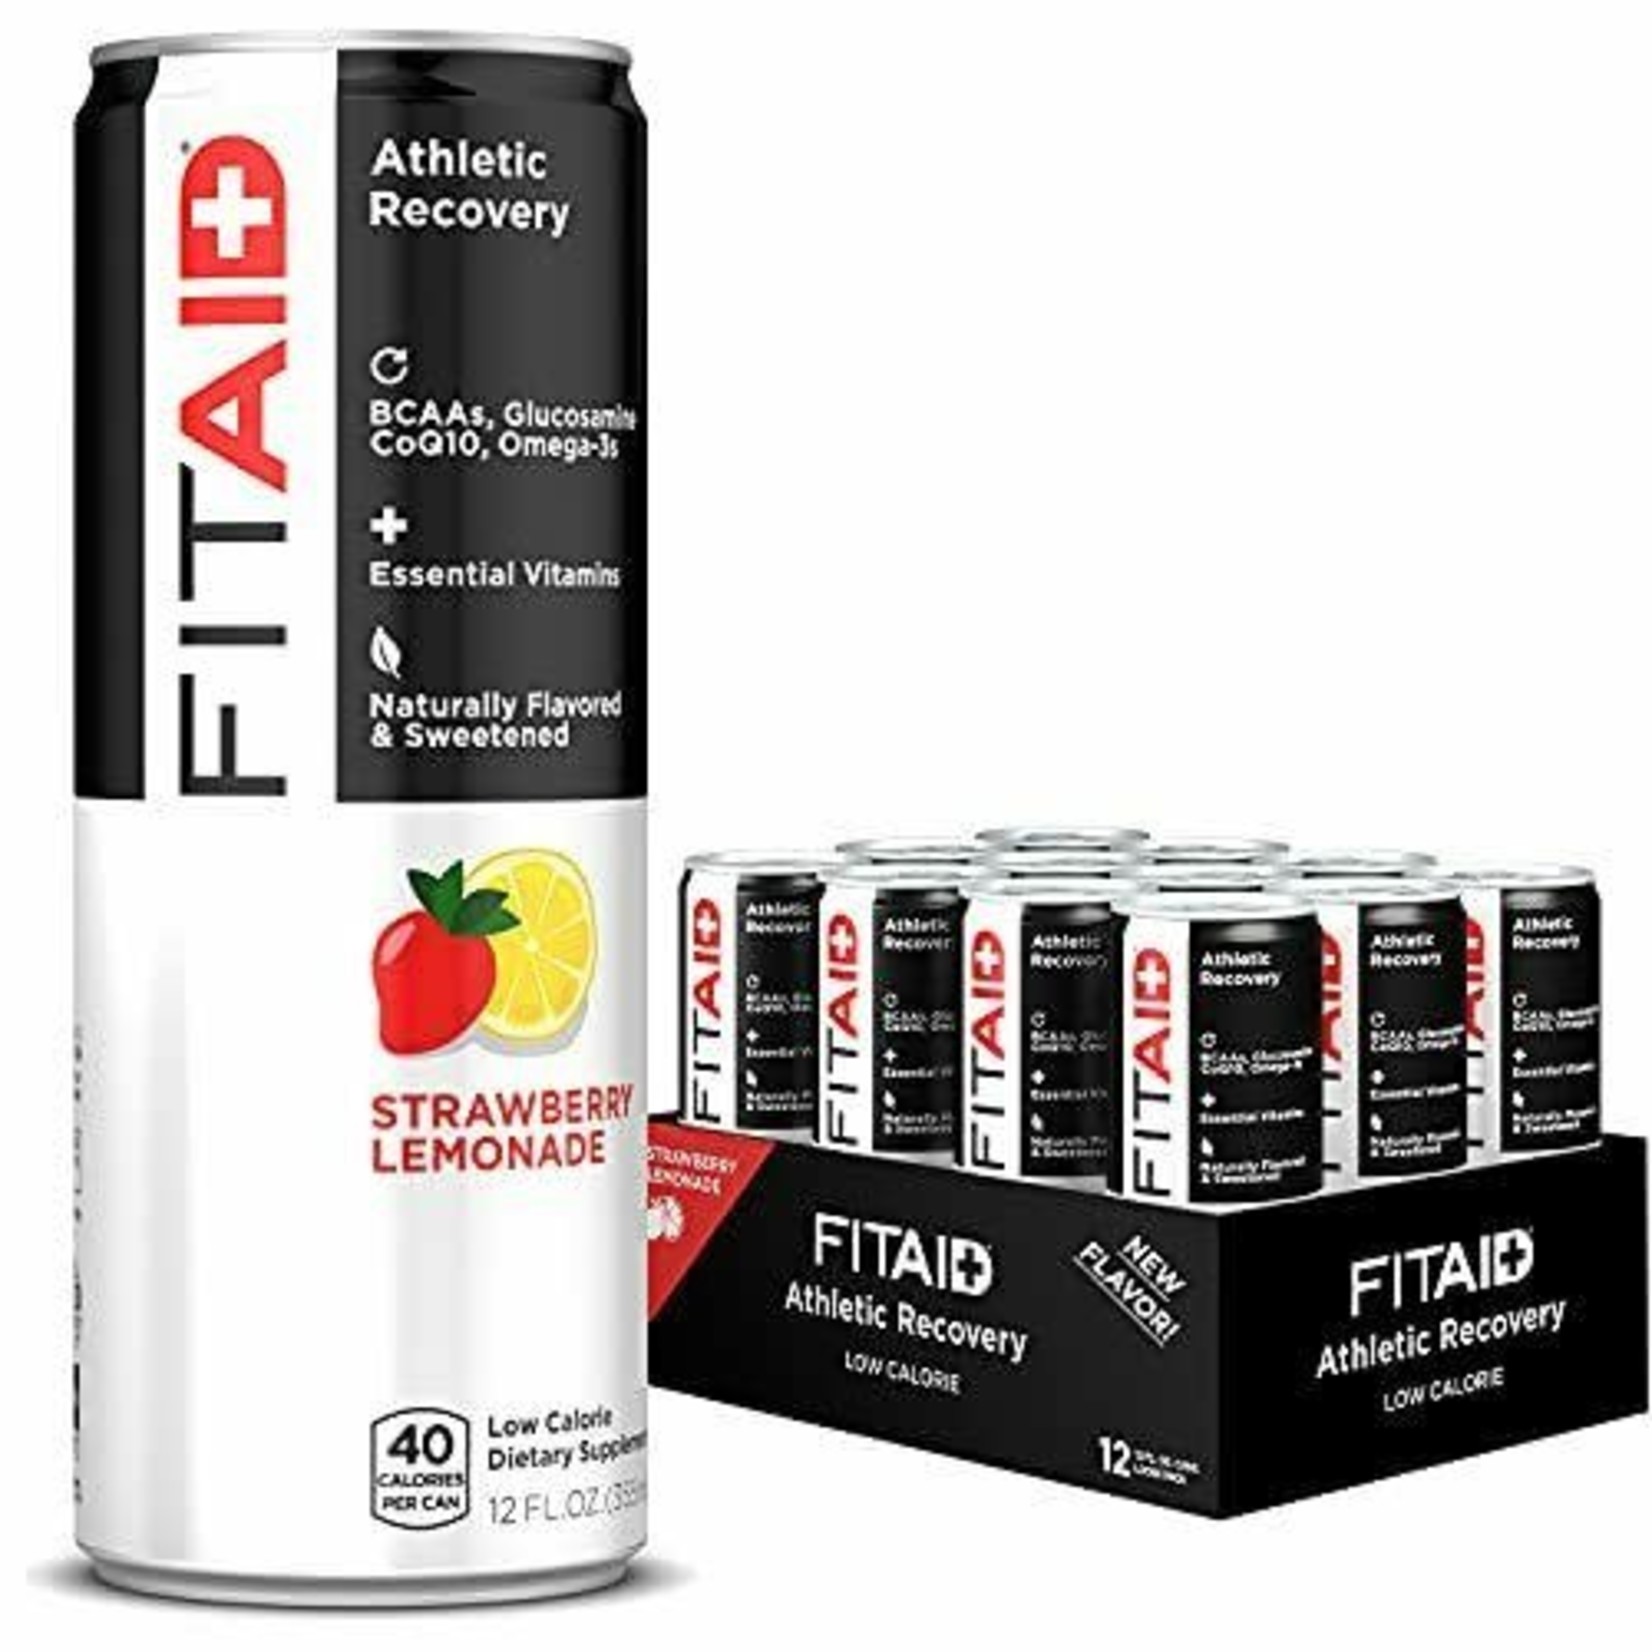 LifeAid LifeAid Fit Aid Athletic Recovery Strawberry Lemonade 12 oz